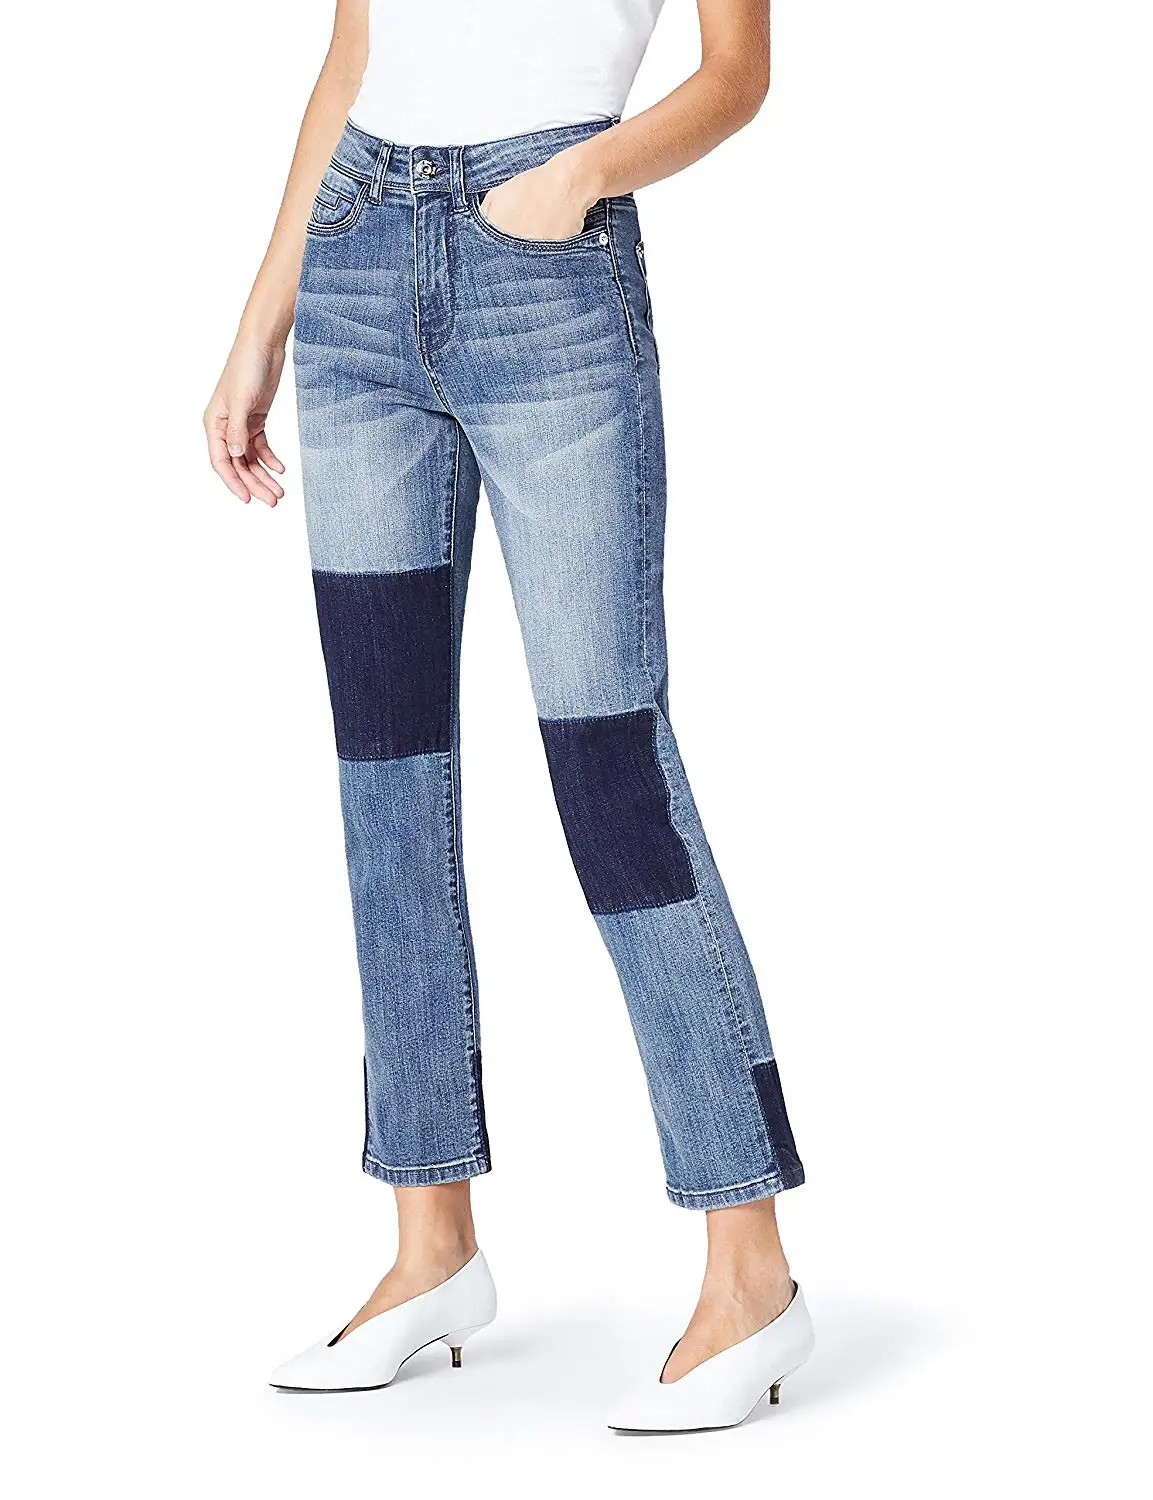 High Waist Skinny Girl Jean Sex Jeans Wear Buy High Quality Women